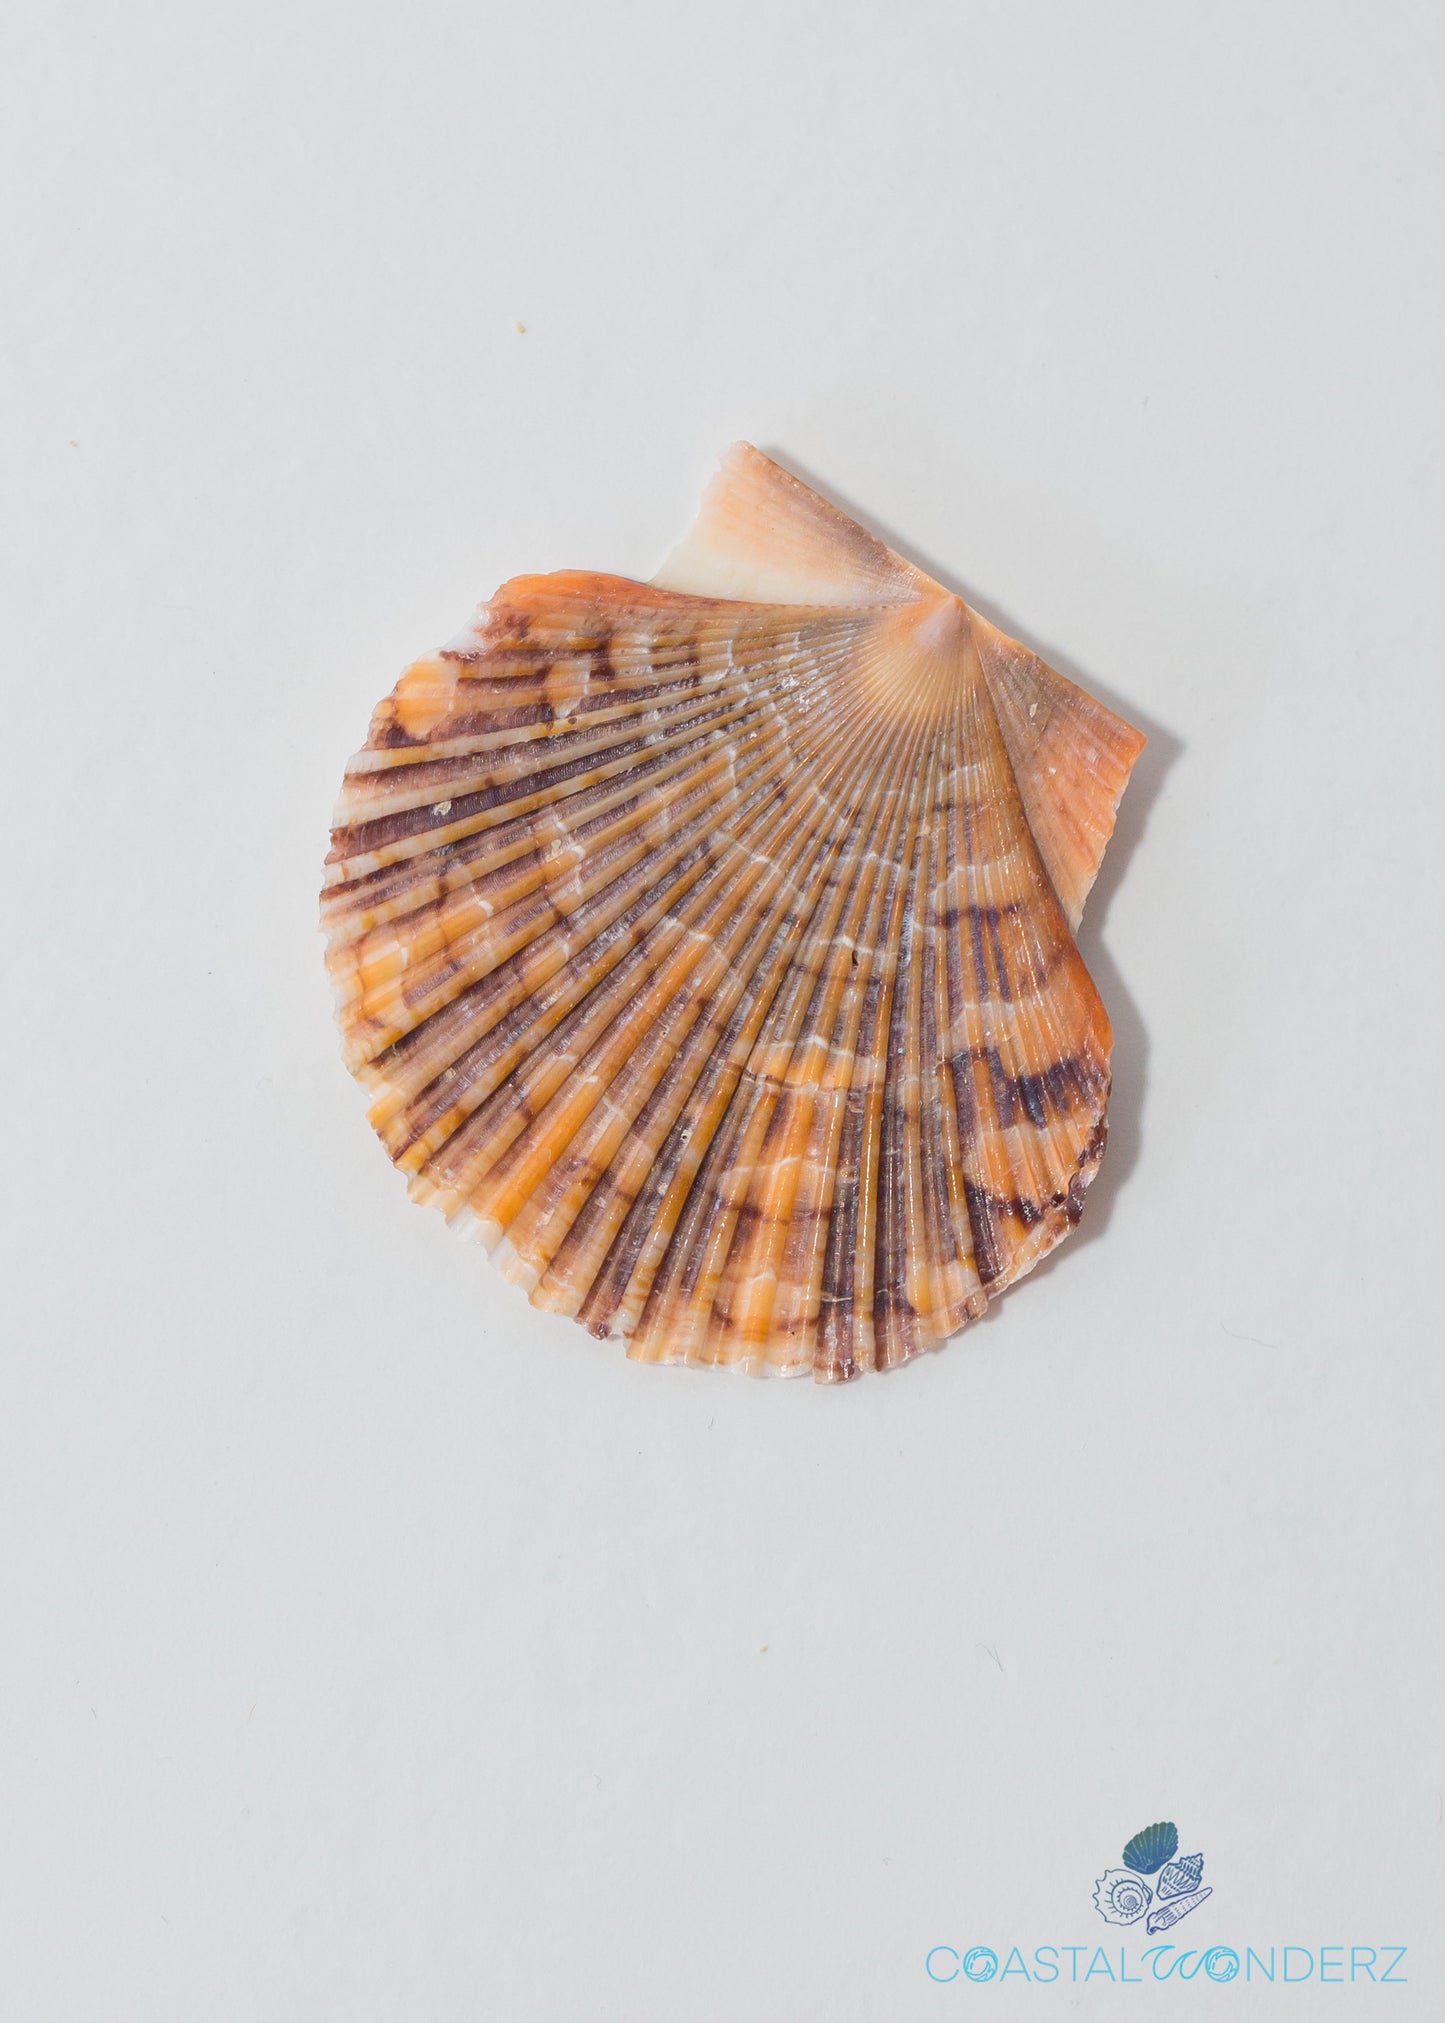 Baby Flat Shell (Pecten Pyxidata)